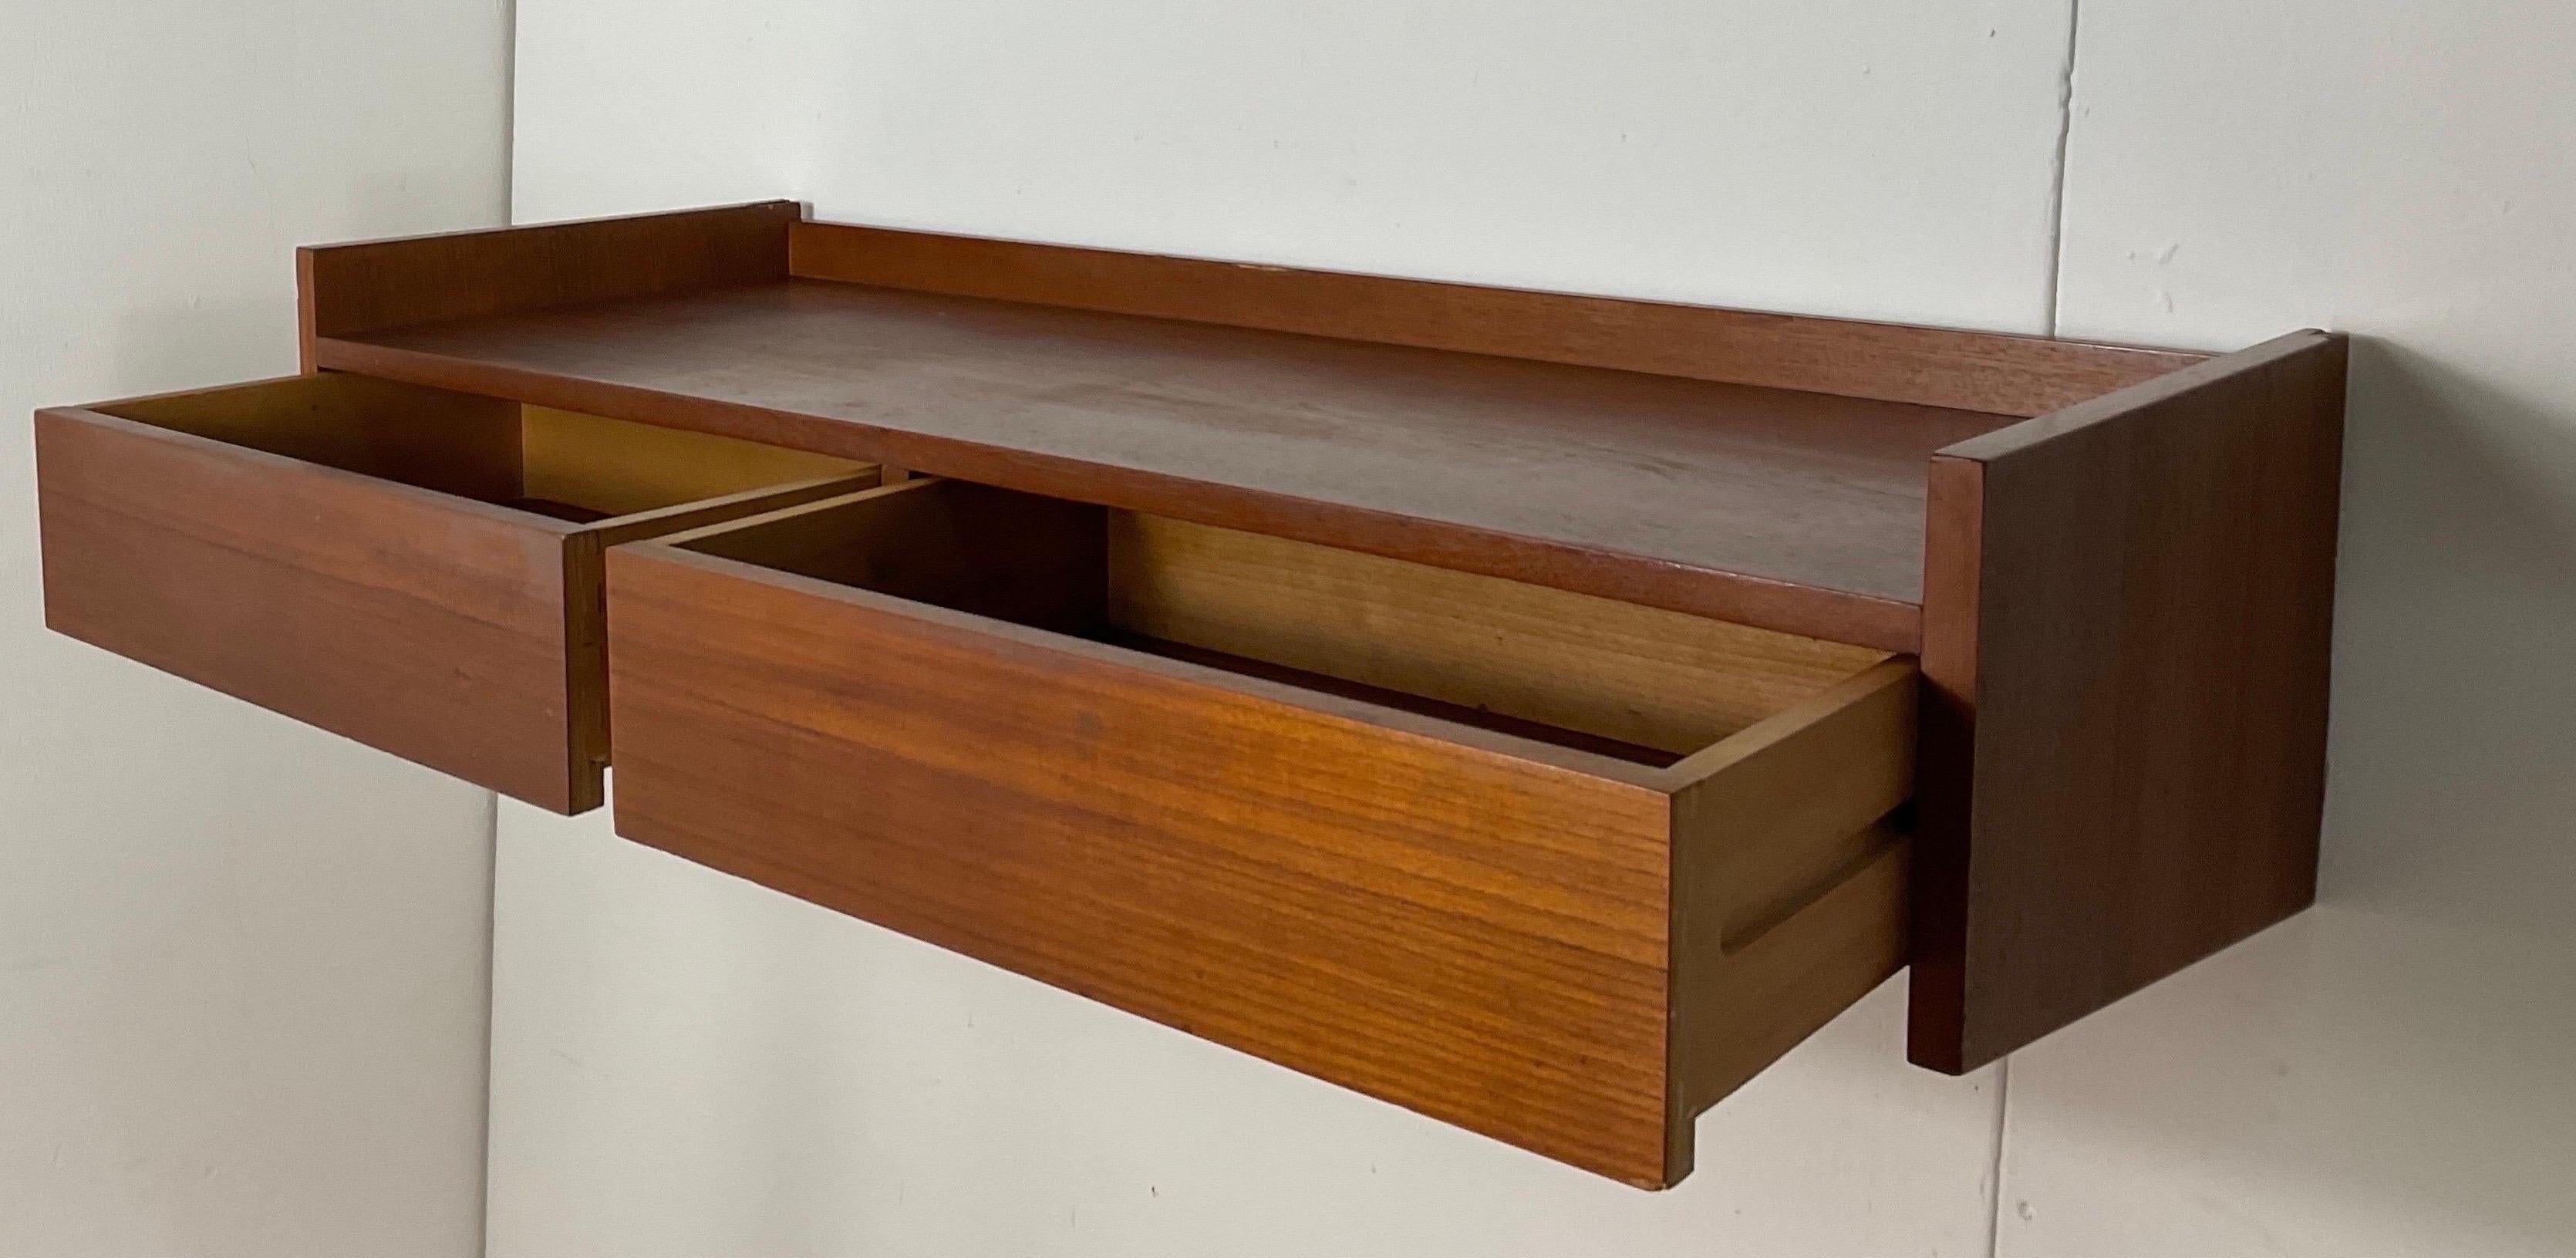 Furted wood wall console attributable to Osvaldo Borsani For Sale 7